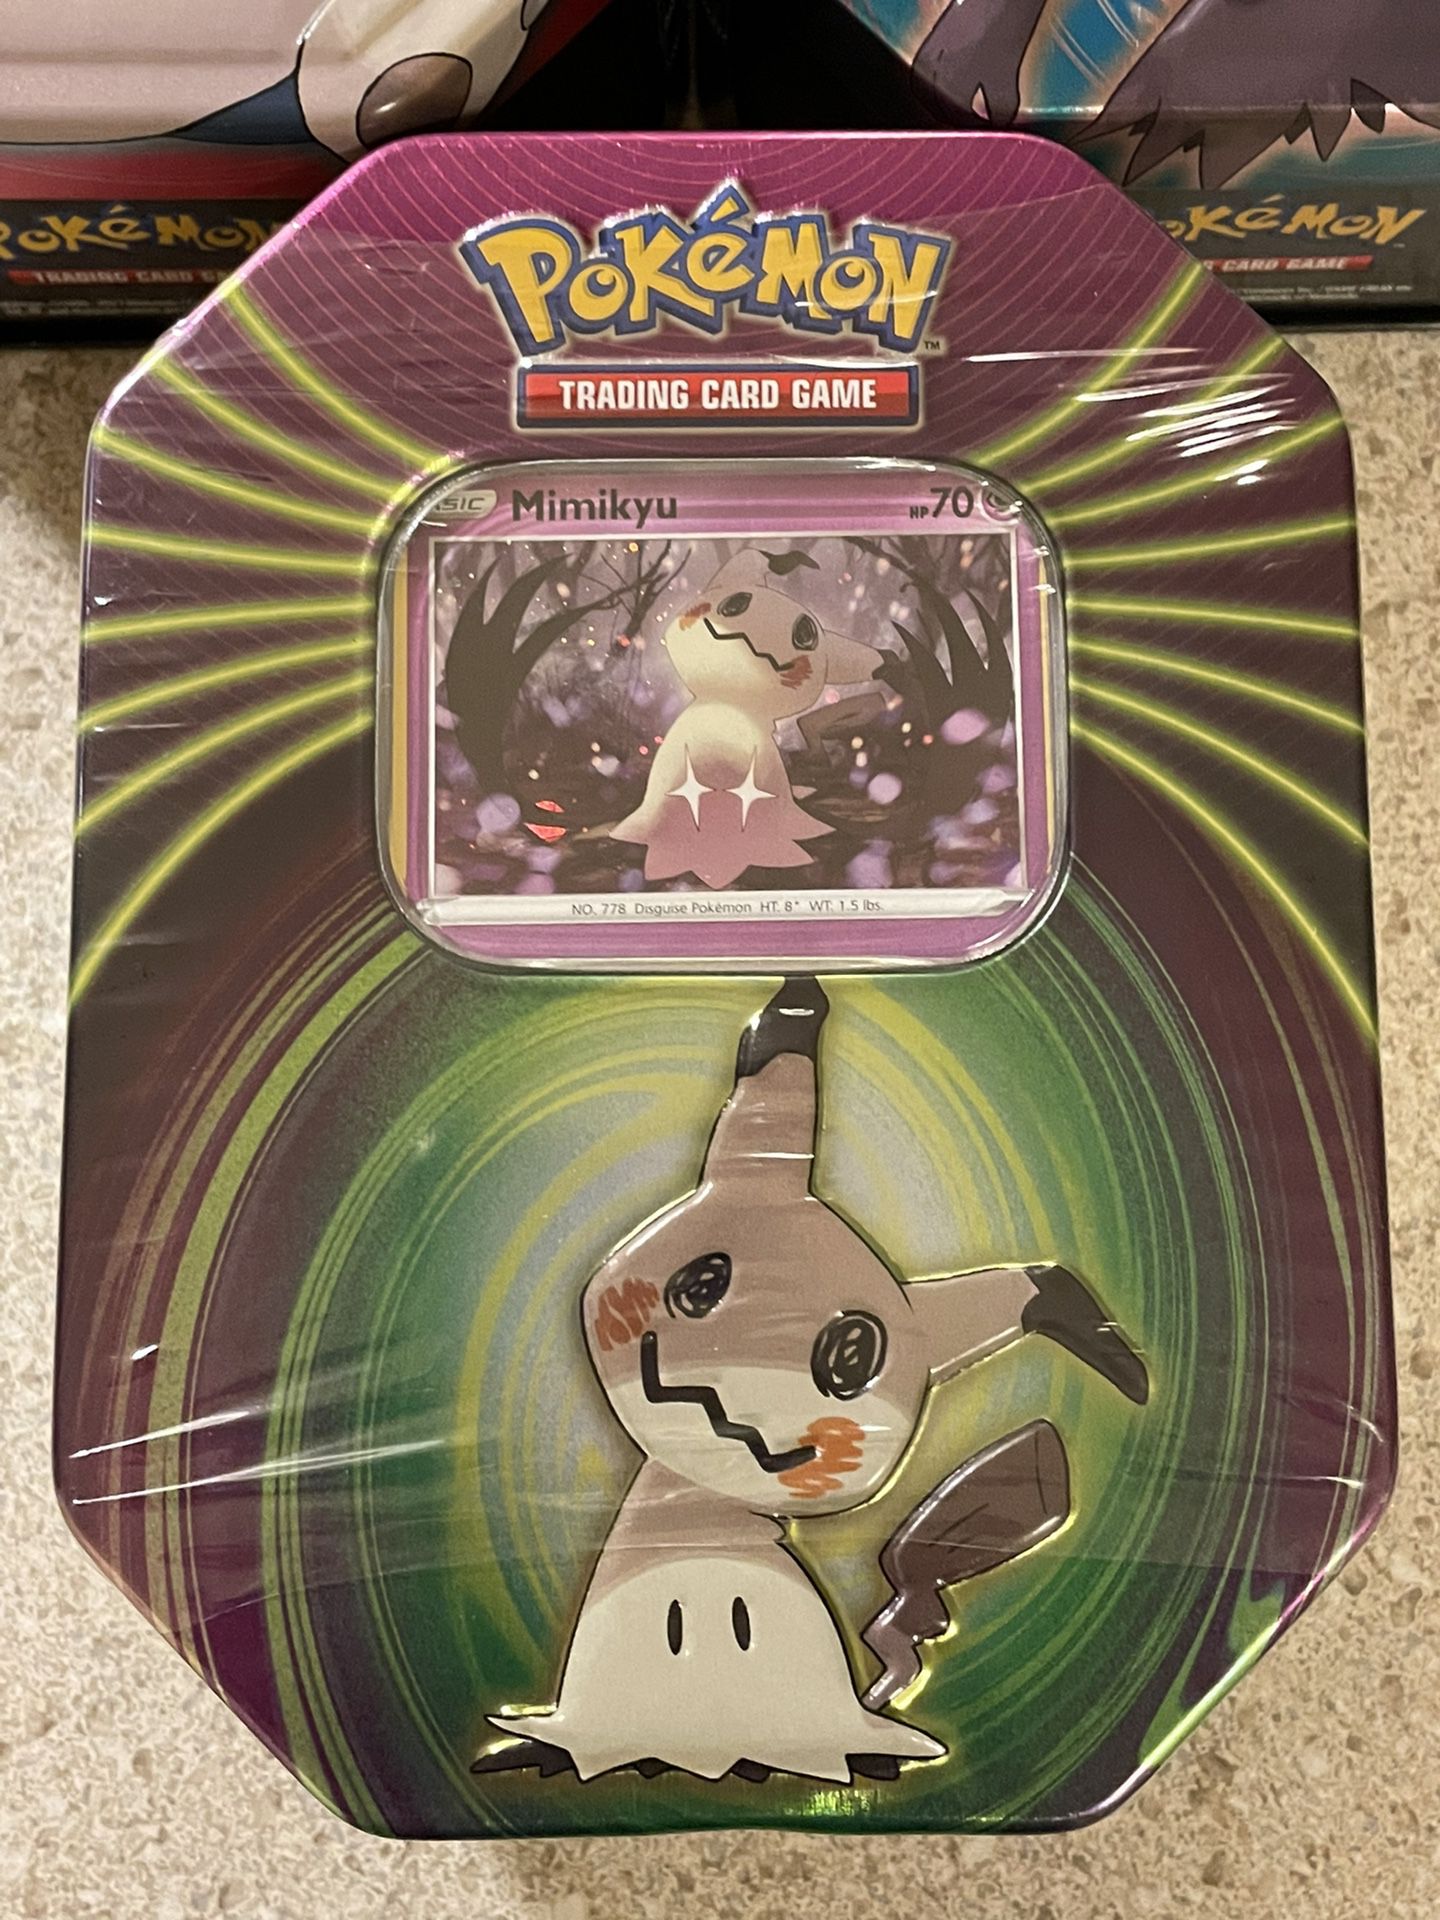 Pokémon Collection Tins - Snorlax , Darkrai & Mimikyu